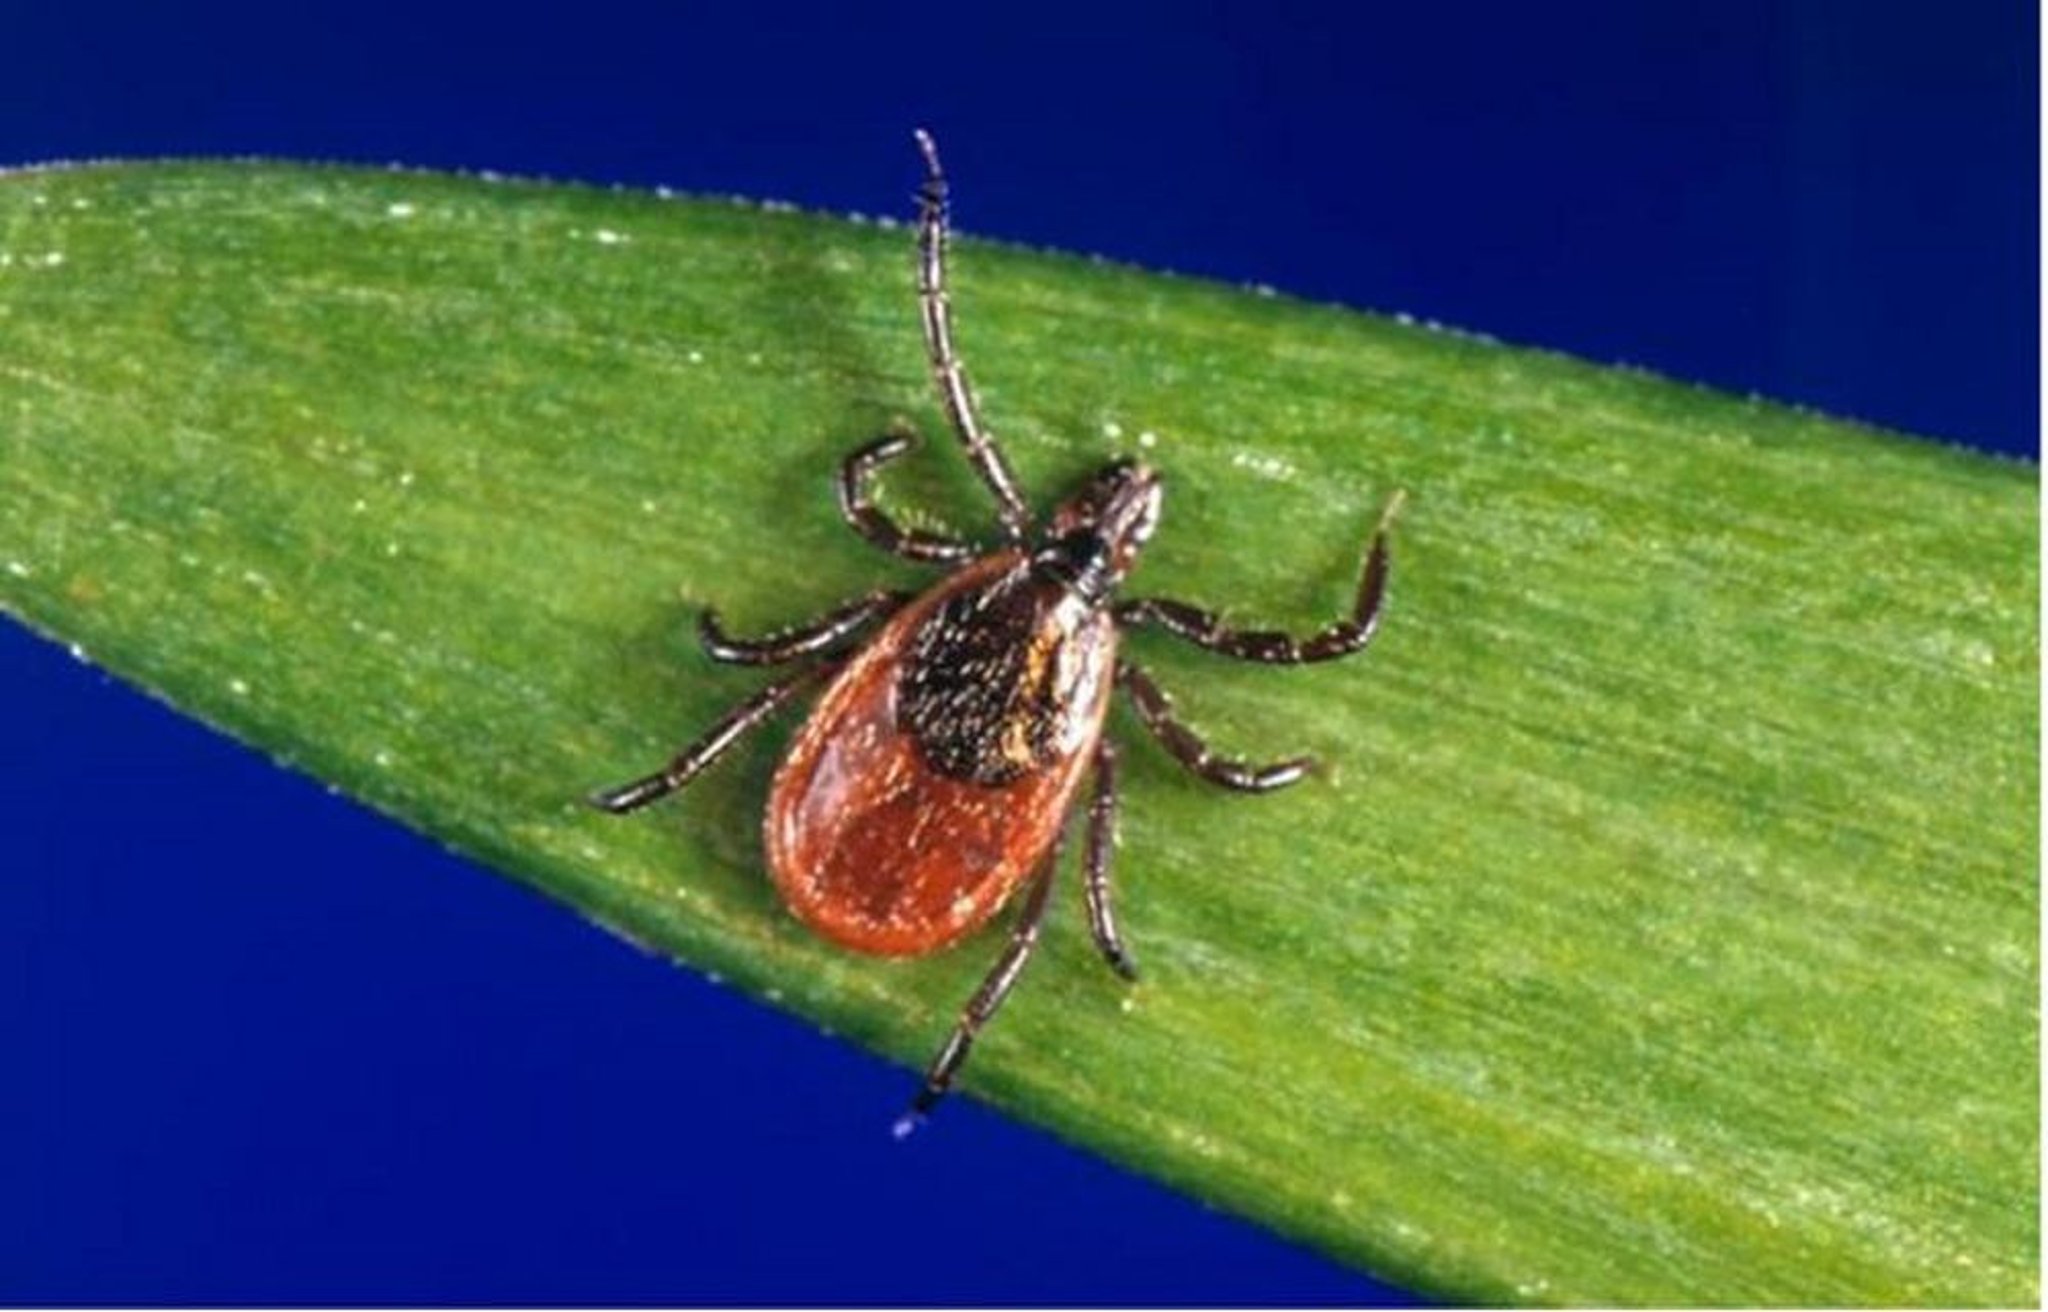 Ixodes scapularis (doença de Lyme)